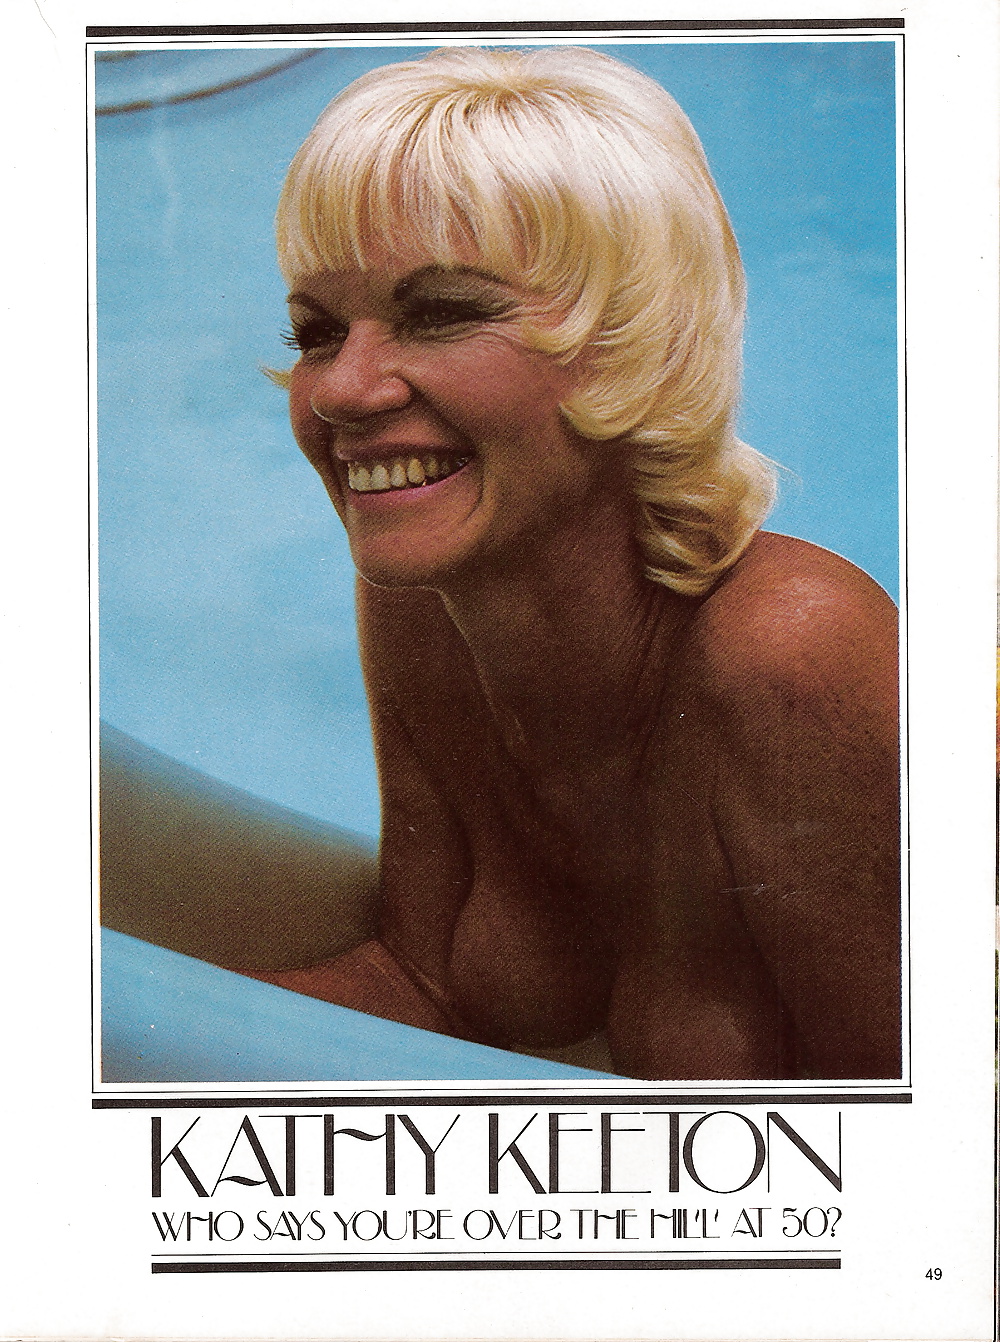 Hustler - September 1975 - Kathy Keeton - über Dem Hügel Bei 50? #27250986